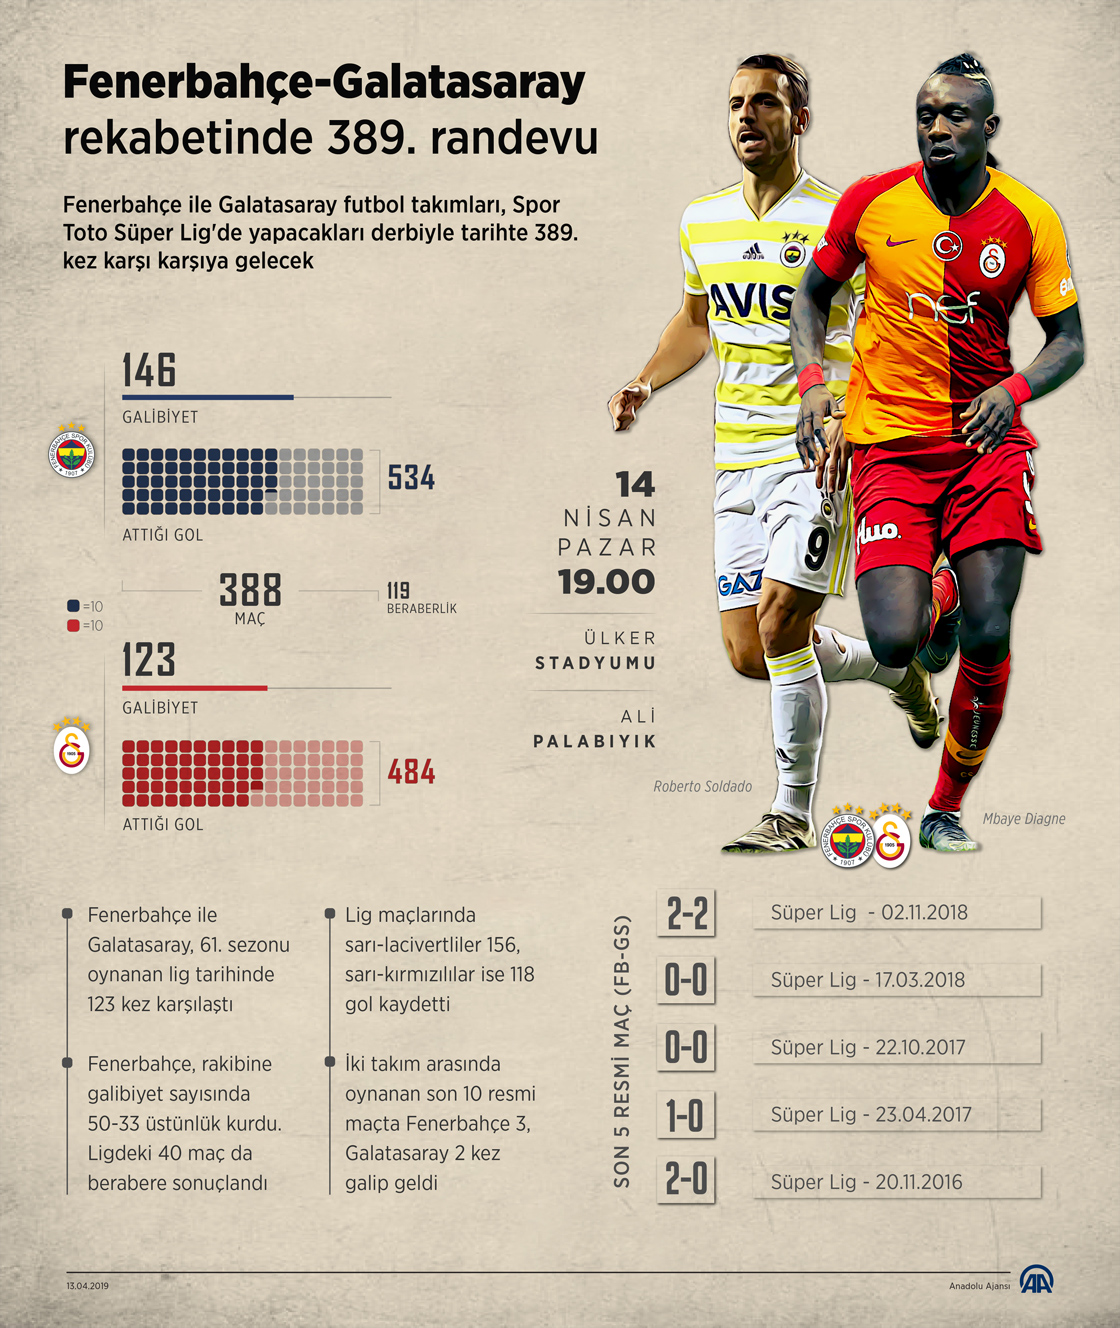 Fenerbahçe-Galatasaray rekabetinde 389. randevu